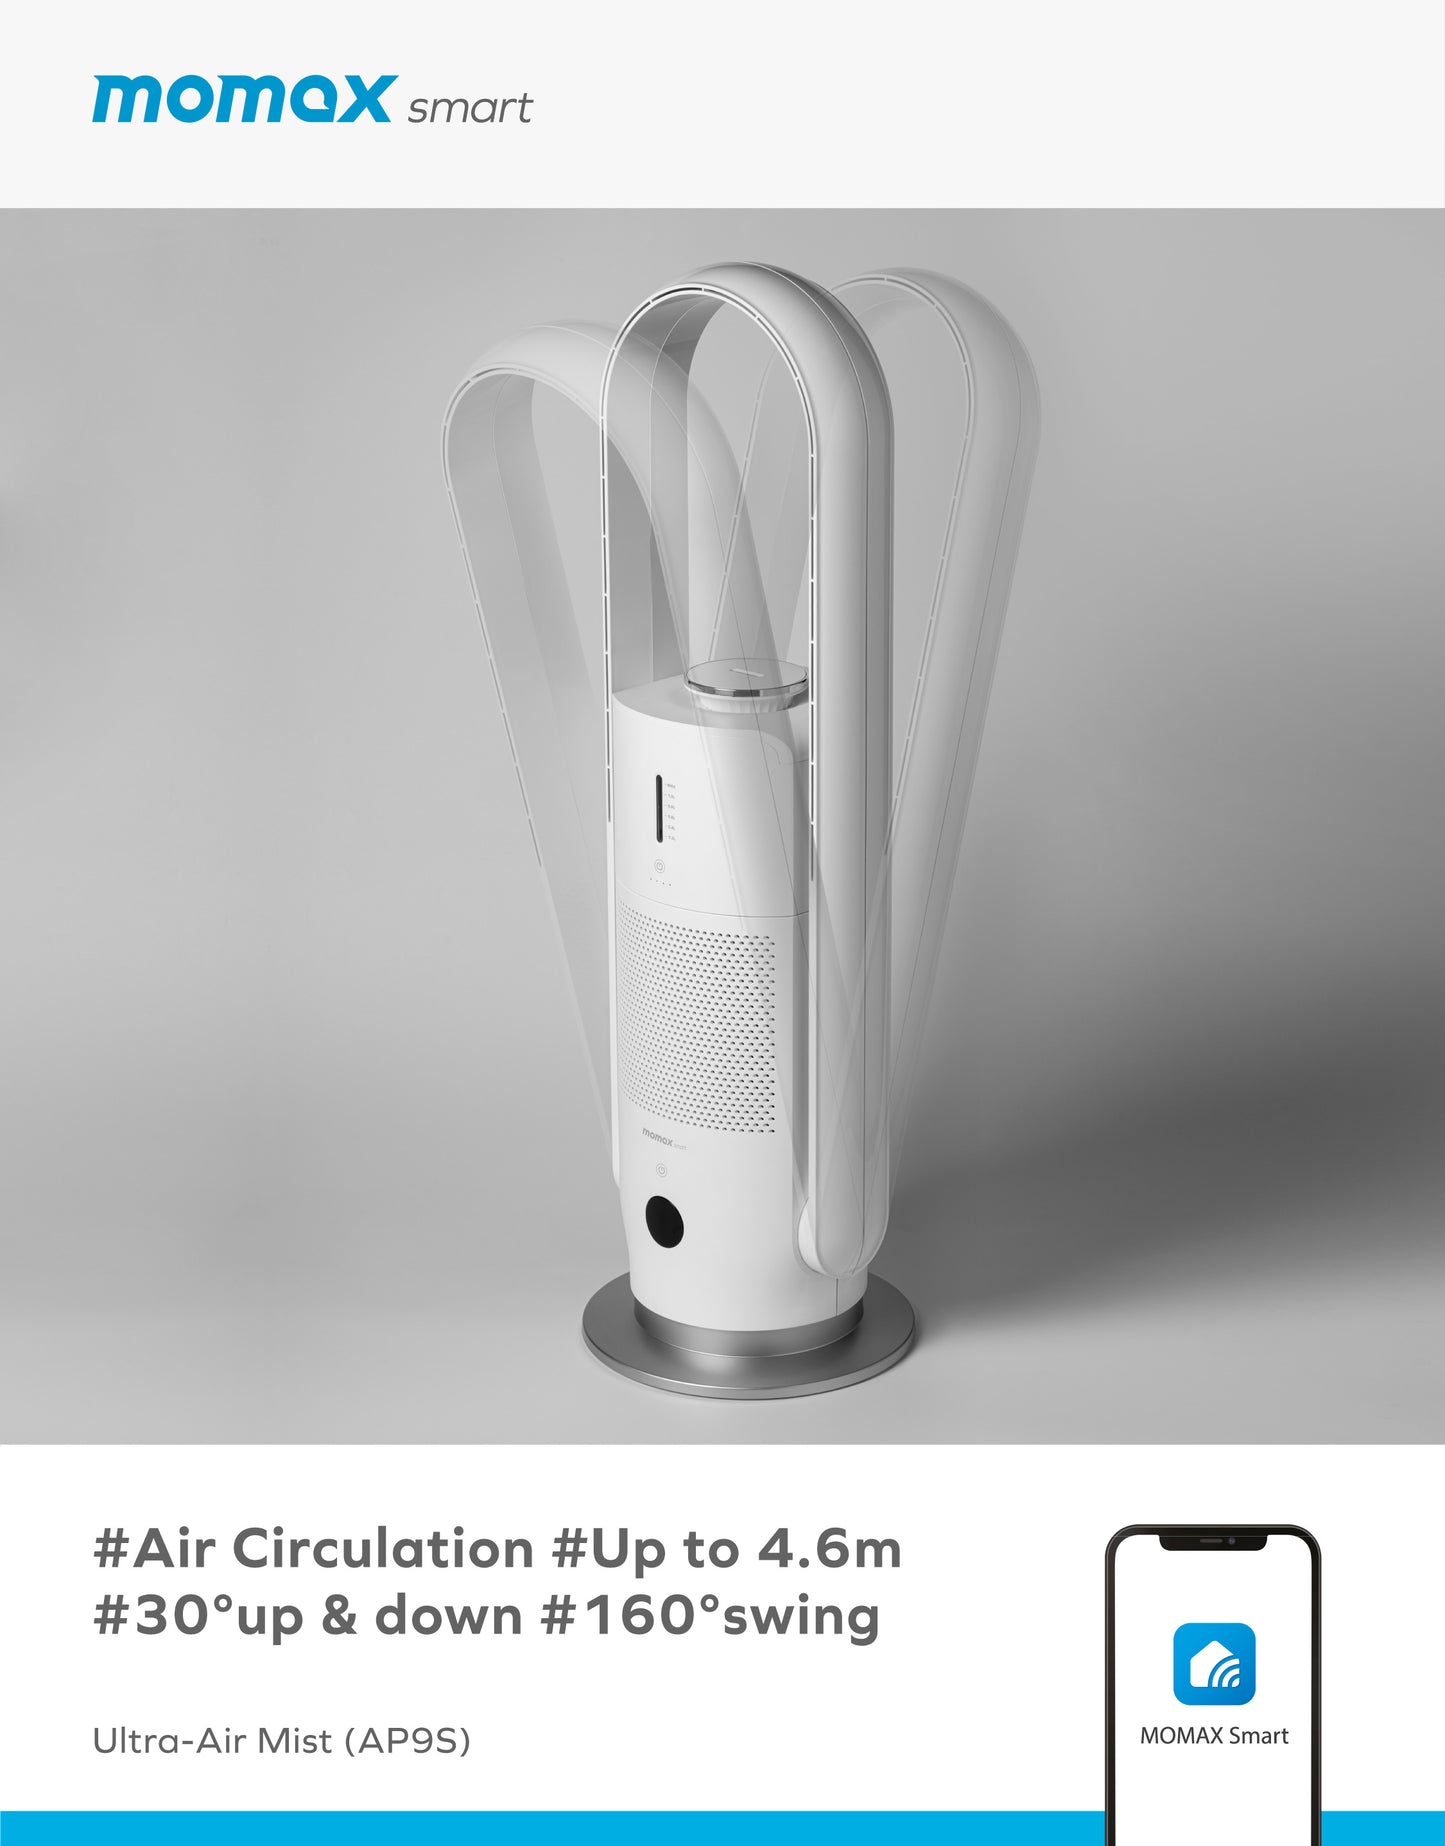 Ultra-Air Mist IoT UV-C Purifying Fan with Humidifier (AP9S) -- Purifying Fan